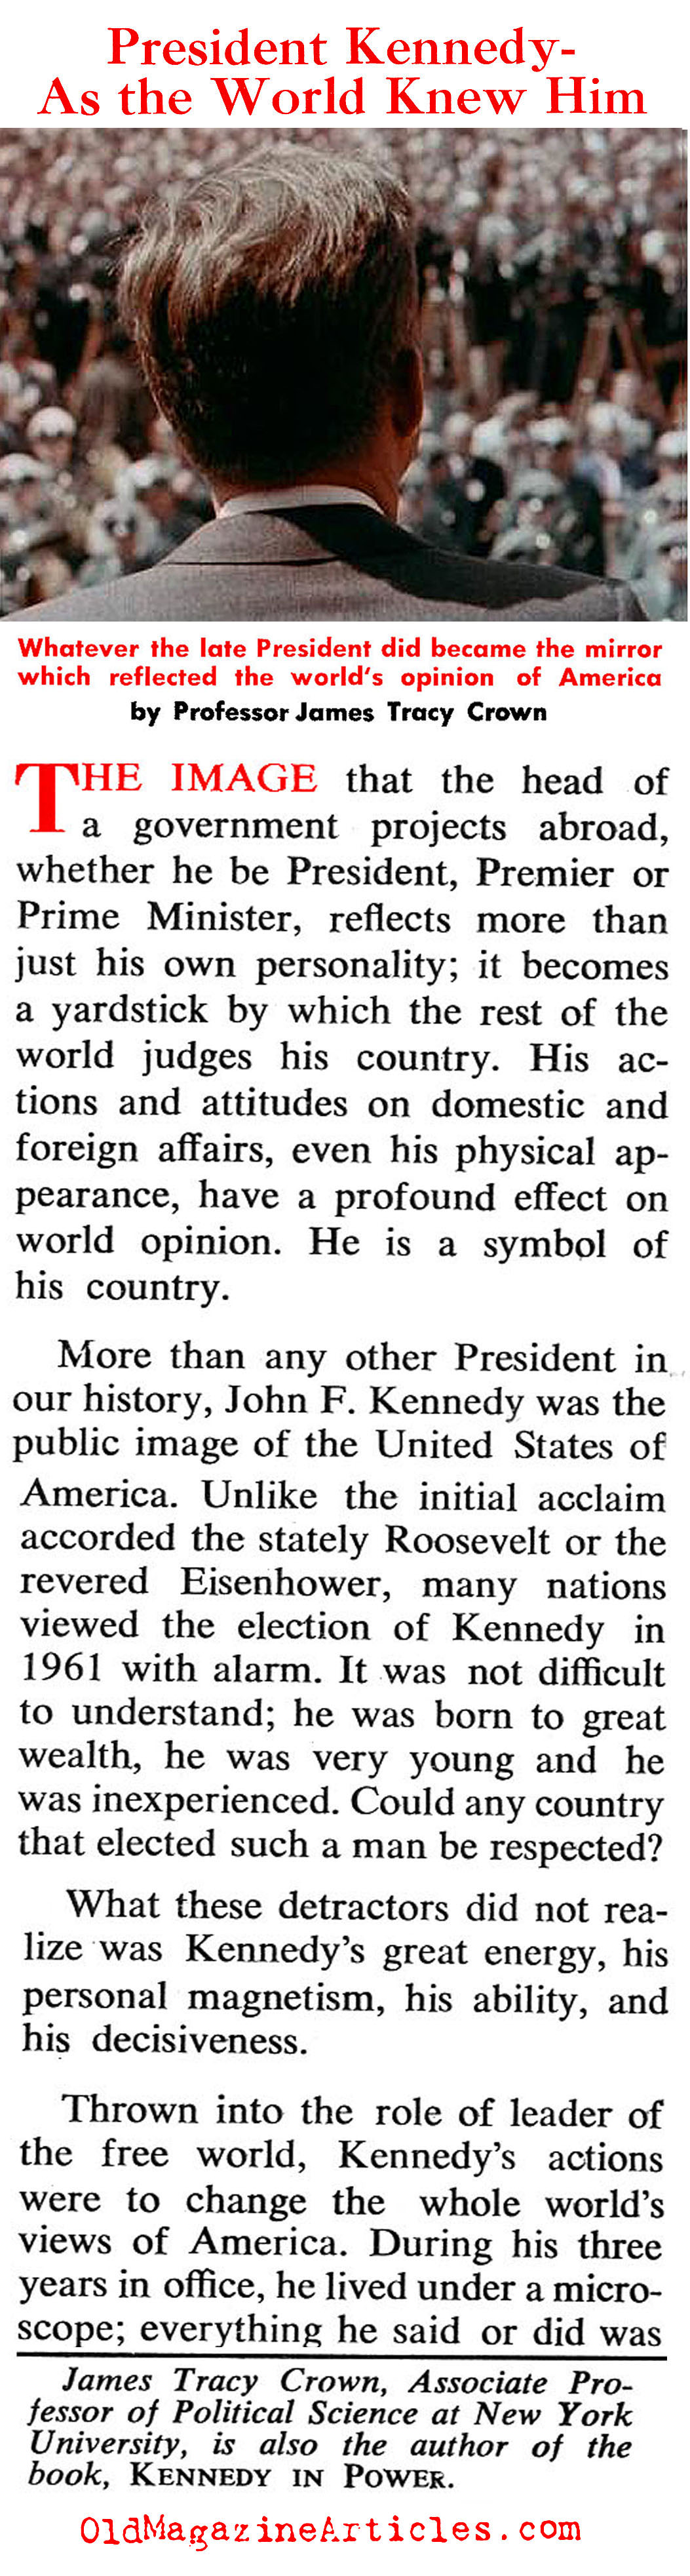 JFK - As the World Saw Him (Coronet Magazine, 1964)